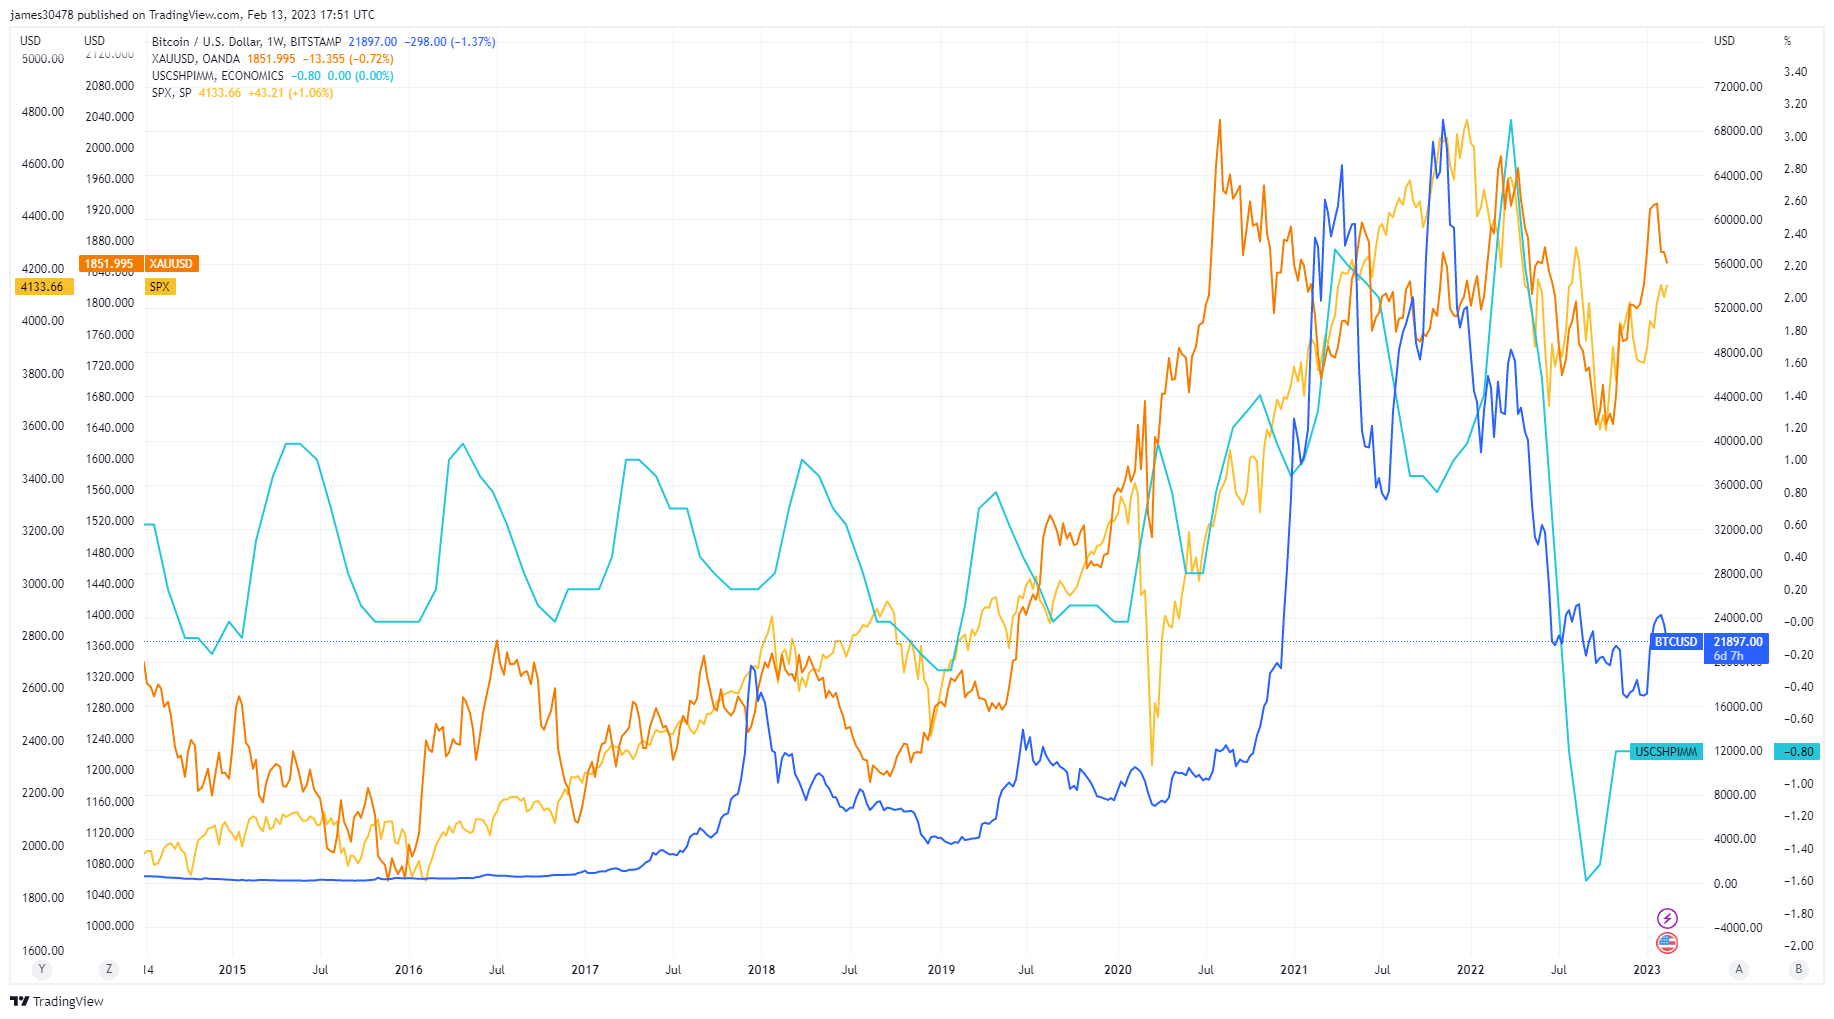 Bitcoin, gold, S&P500, and Case Shiller